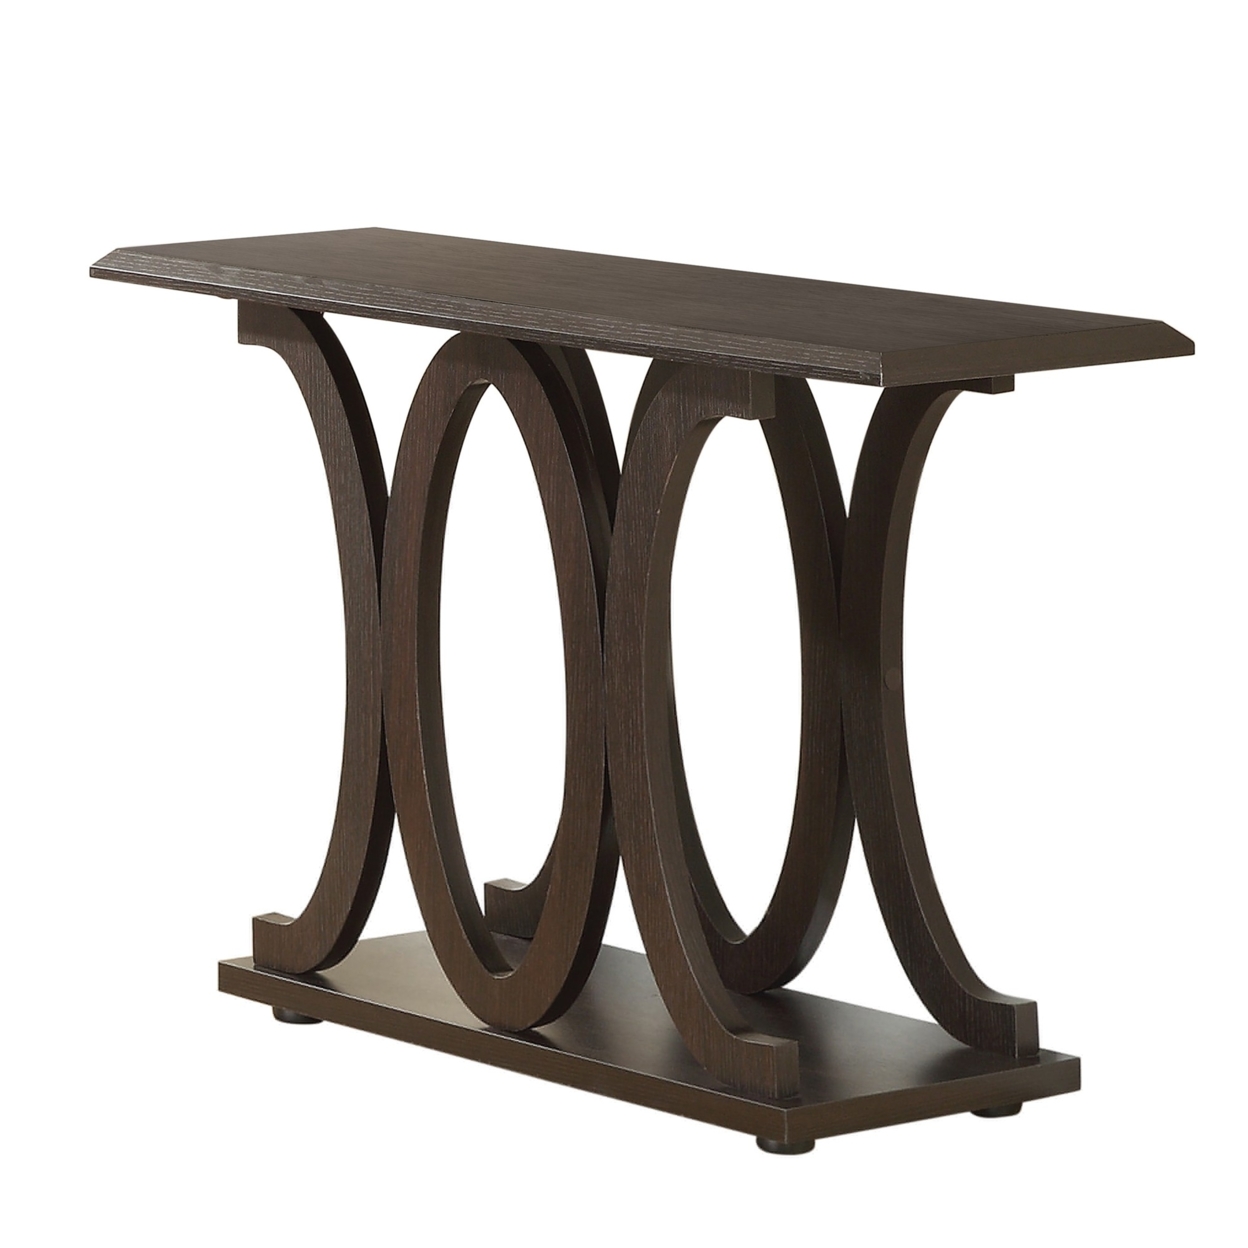 Contemporary Style C Shaped Sofa Table With Open Shelf, Espresso Brown- Saltoro Sherpi